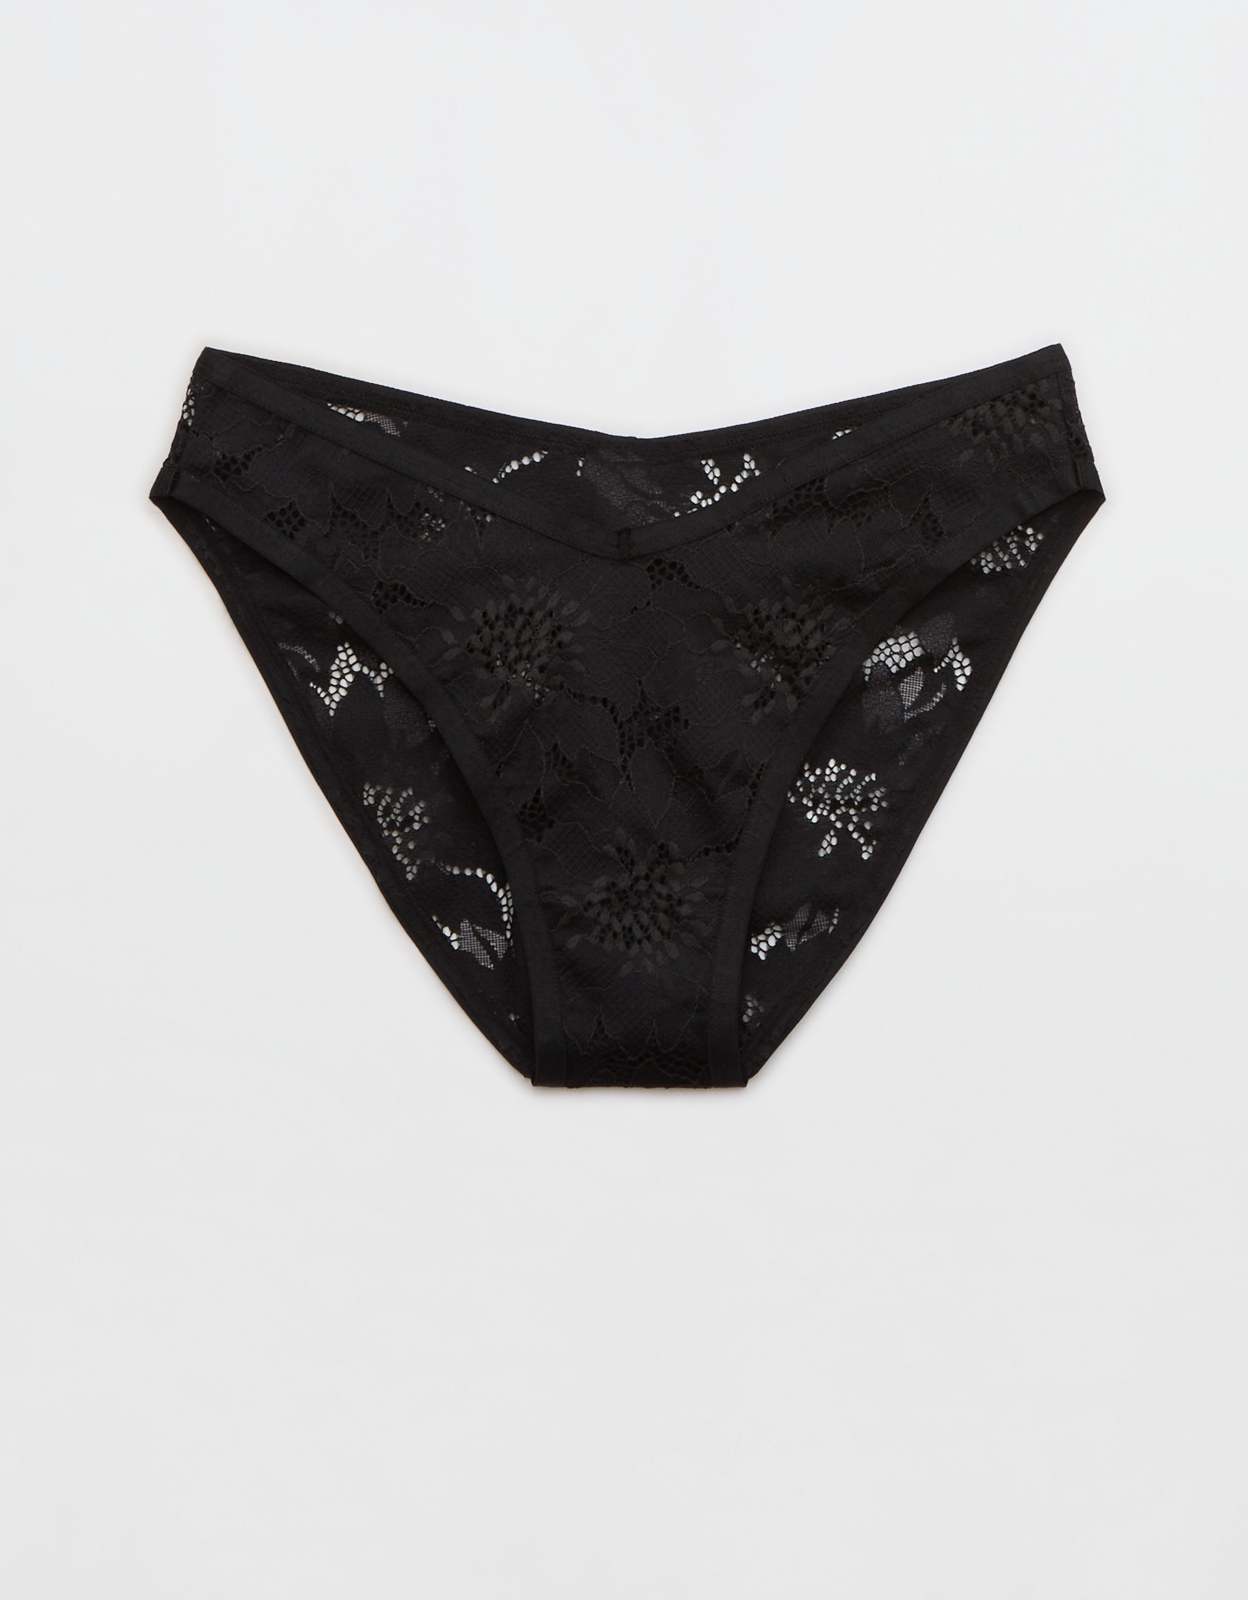 Shop Aerie Midnight Lace High Cut Bikini Underwear online